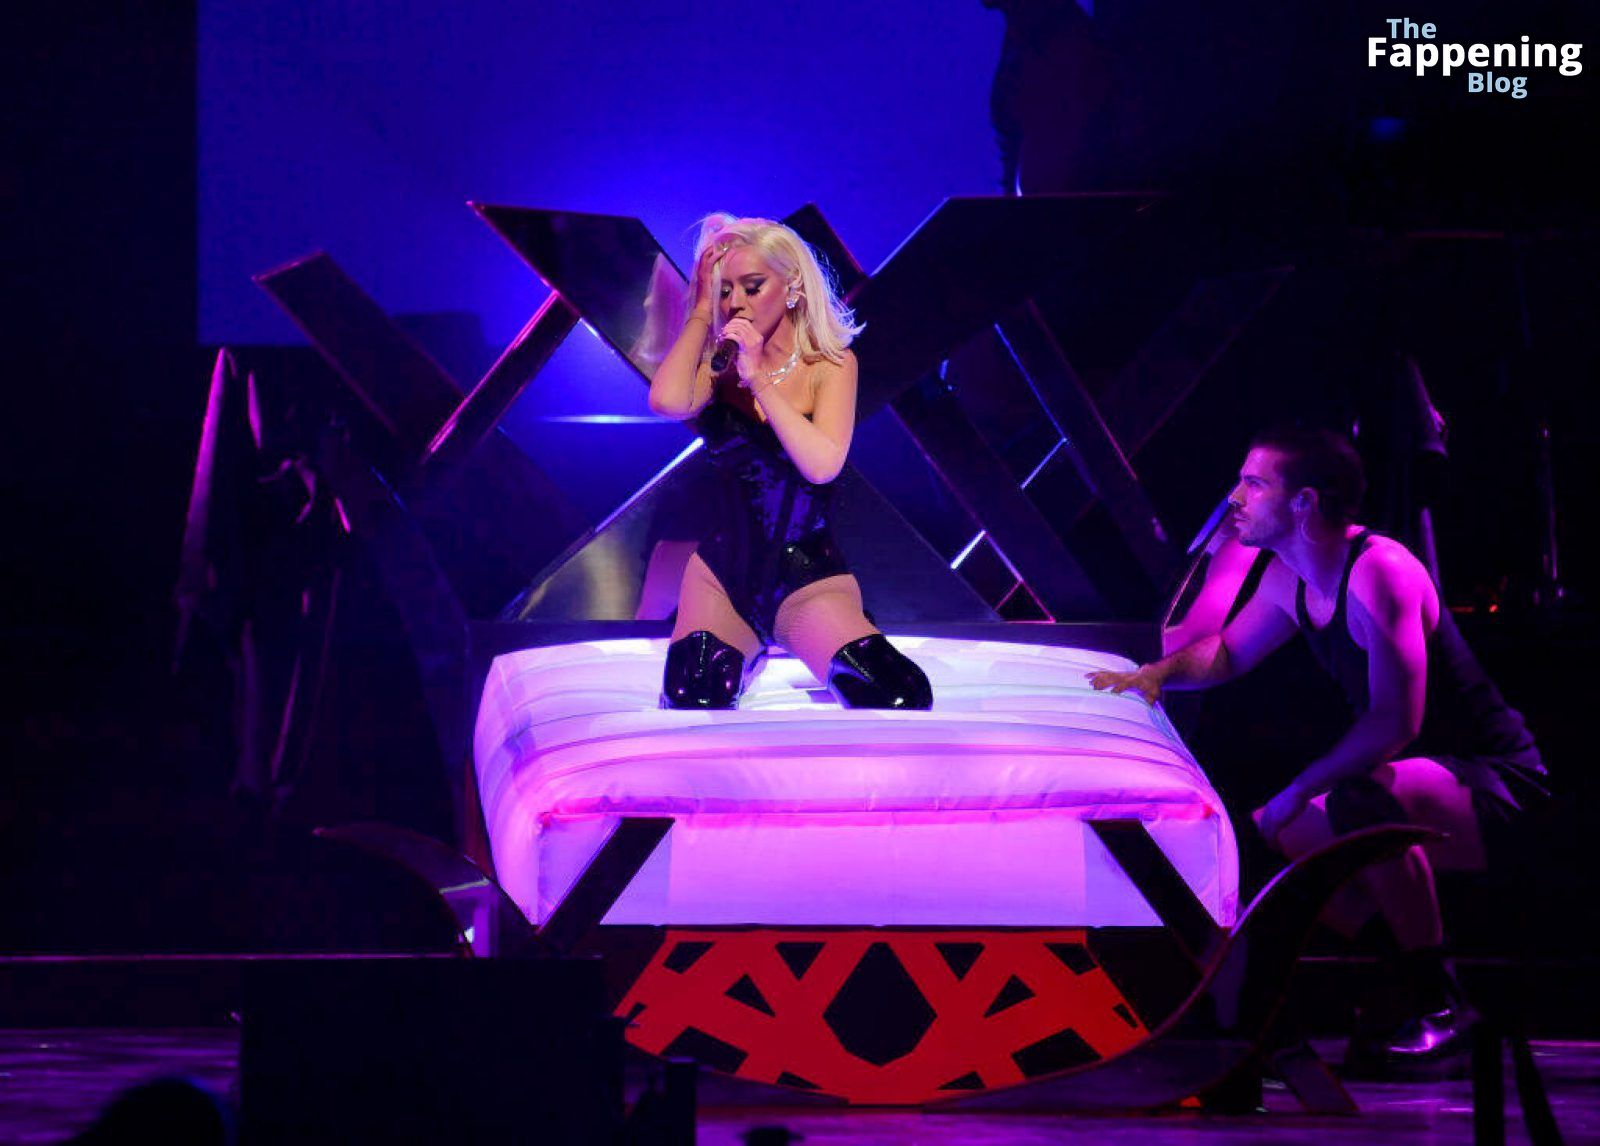 Christina Aguilera Looks Stunning in Vegas (24 Photos)